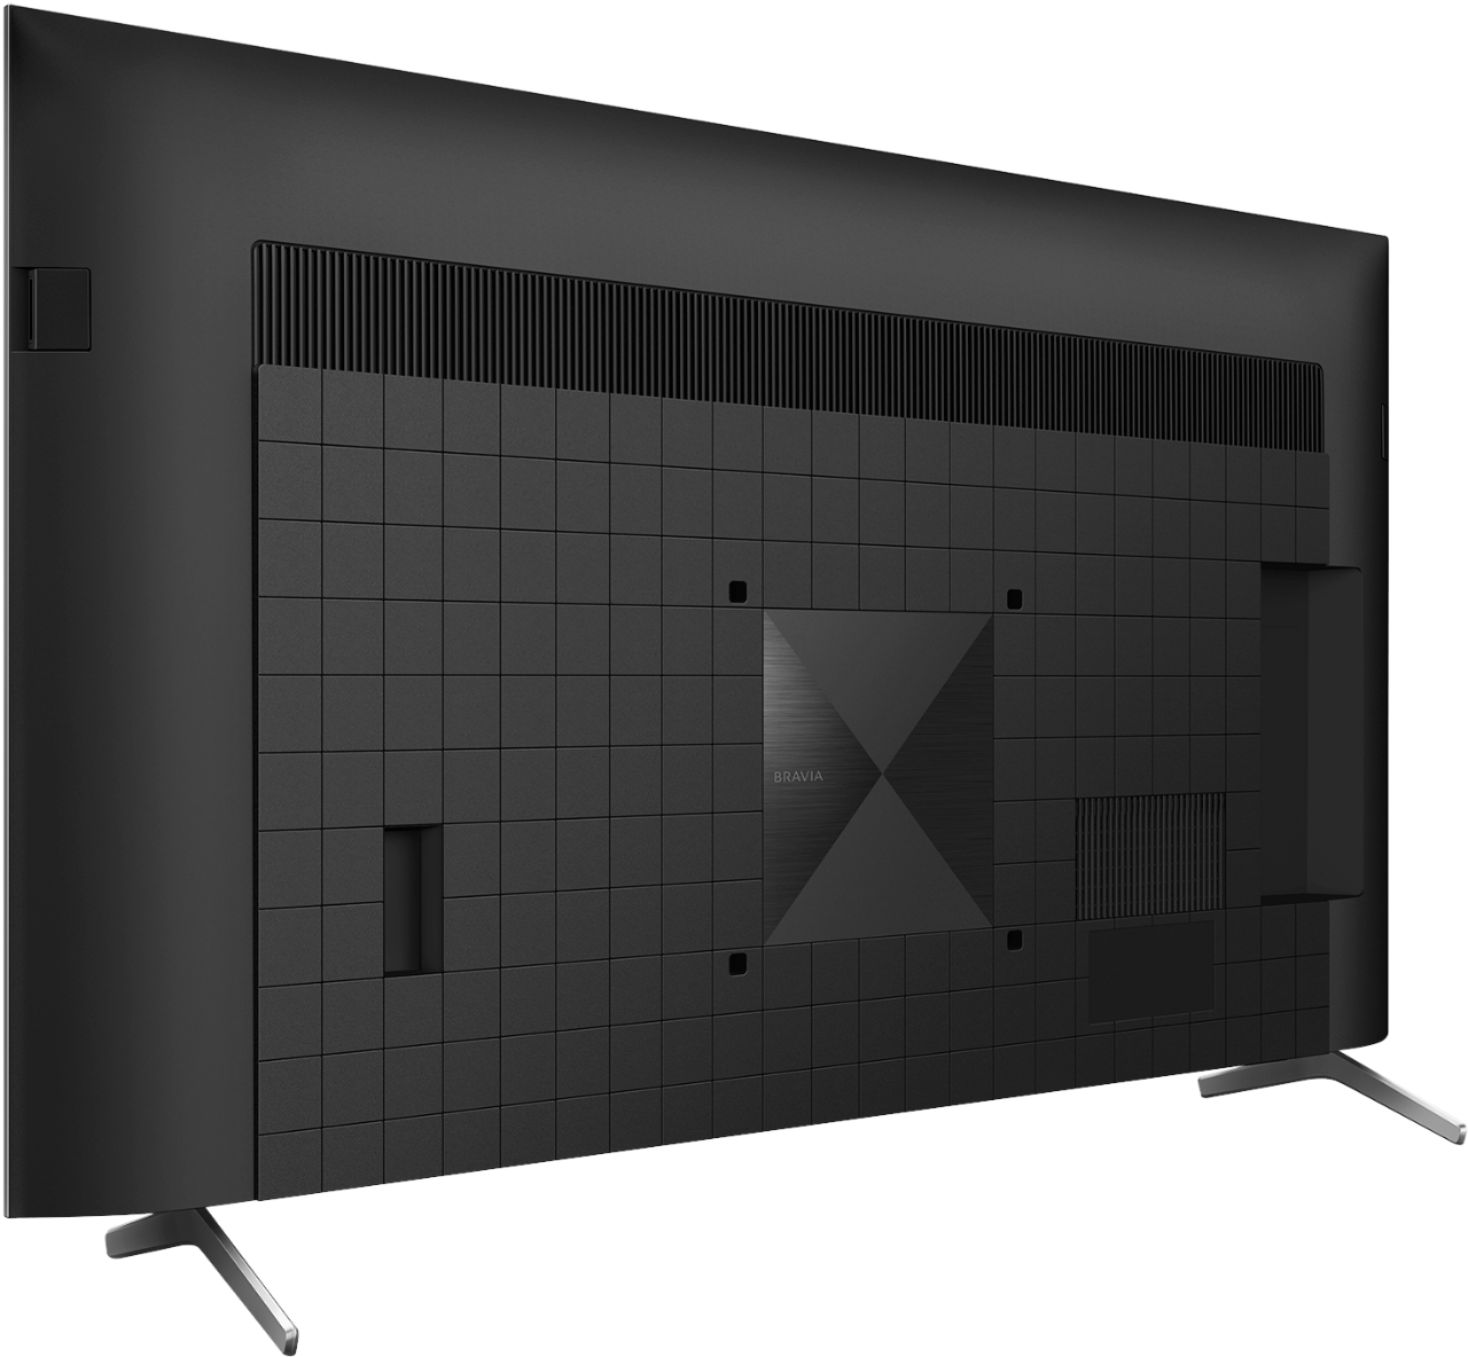 Angle View: Samsung - 43" Class 8000 Series LED 4K UHD Smart Tizen TV